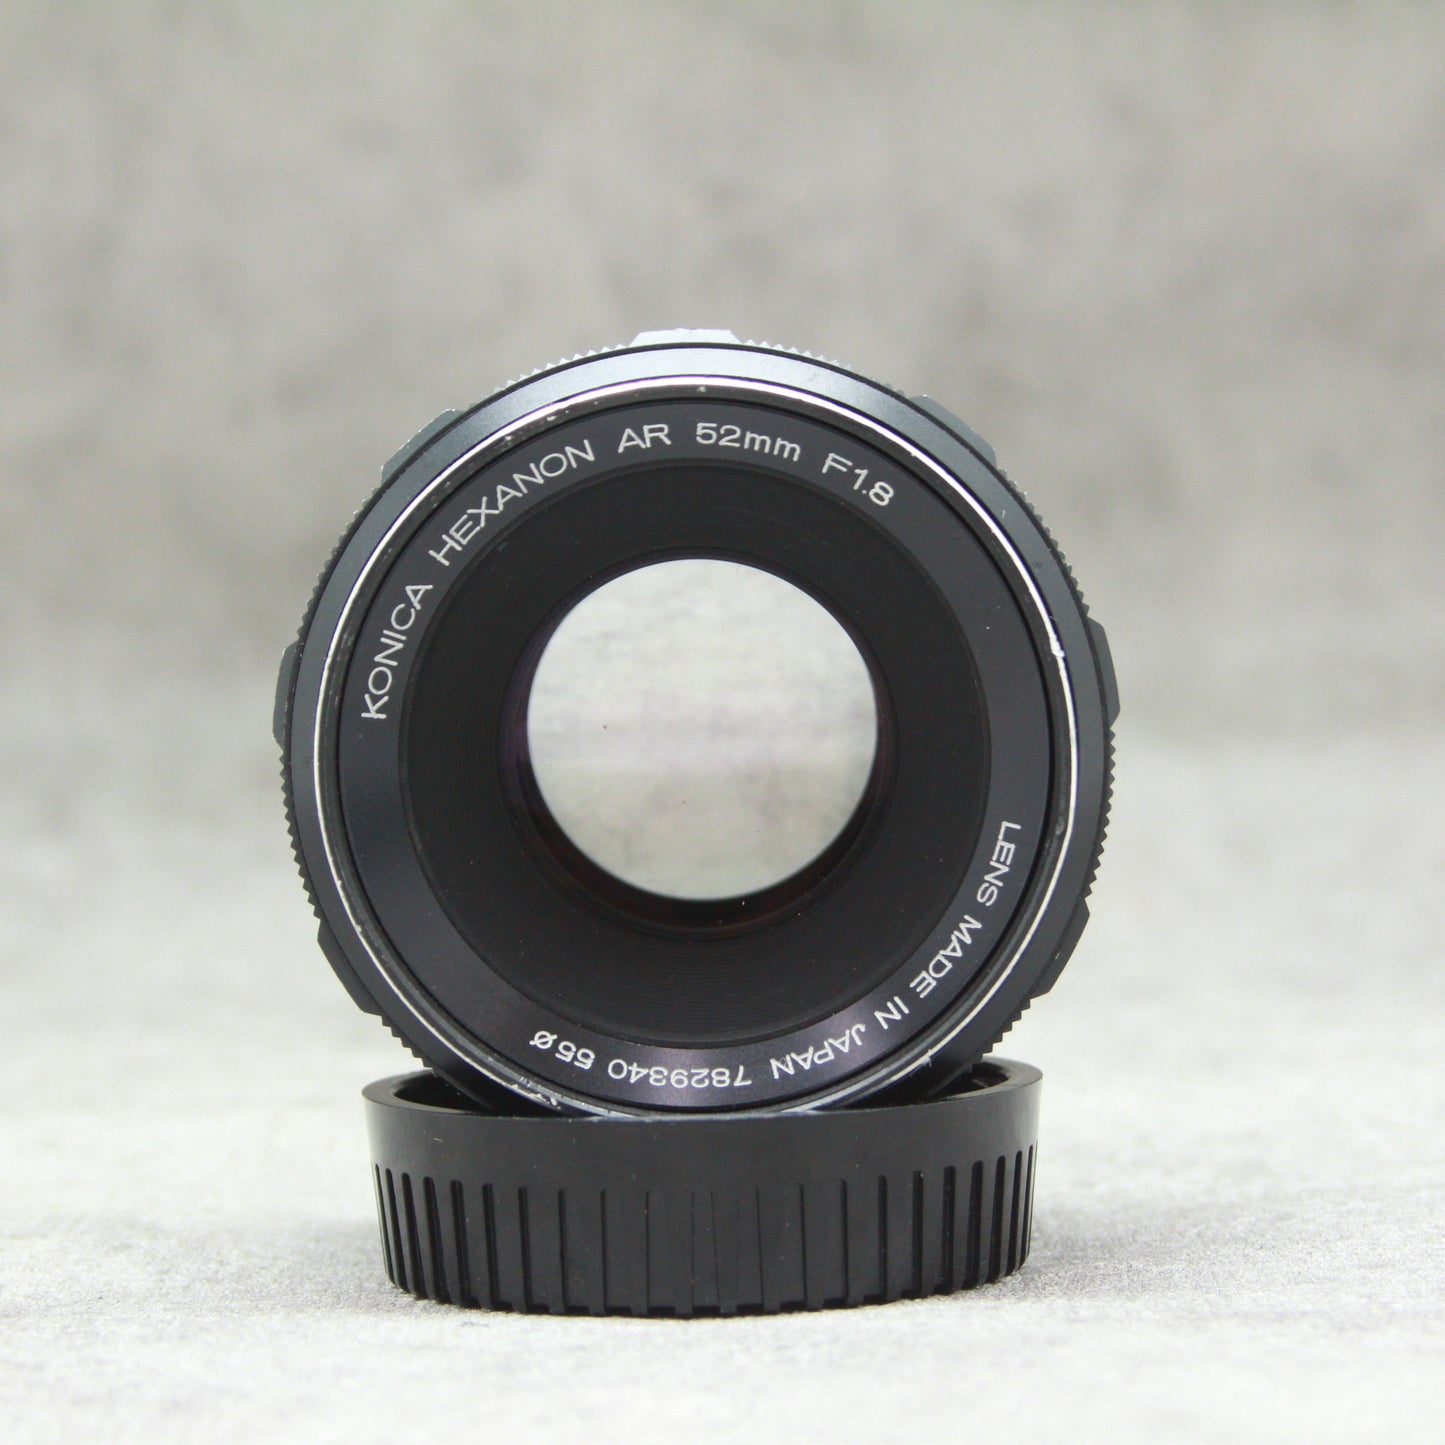 KONICA コニカ HEXANON AR 52mm f1.8 - レンズ(単焦点)